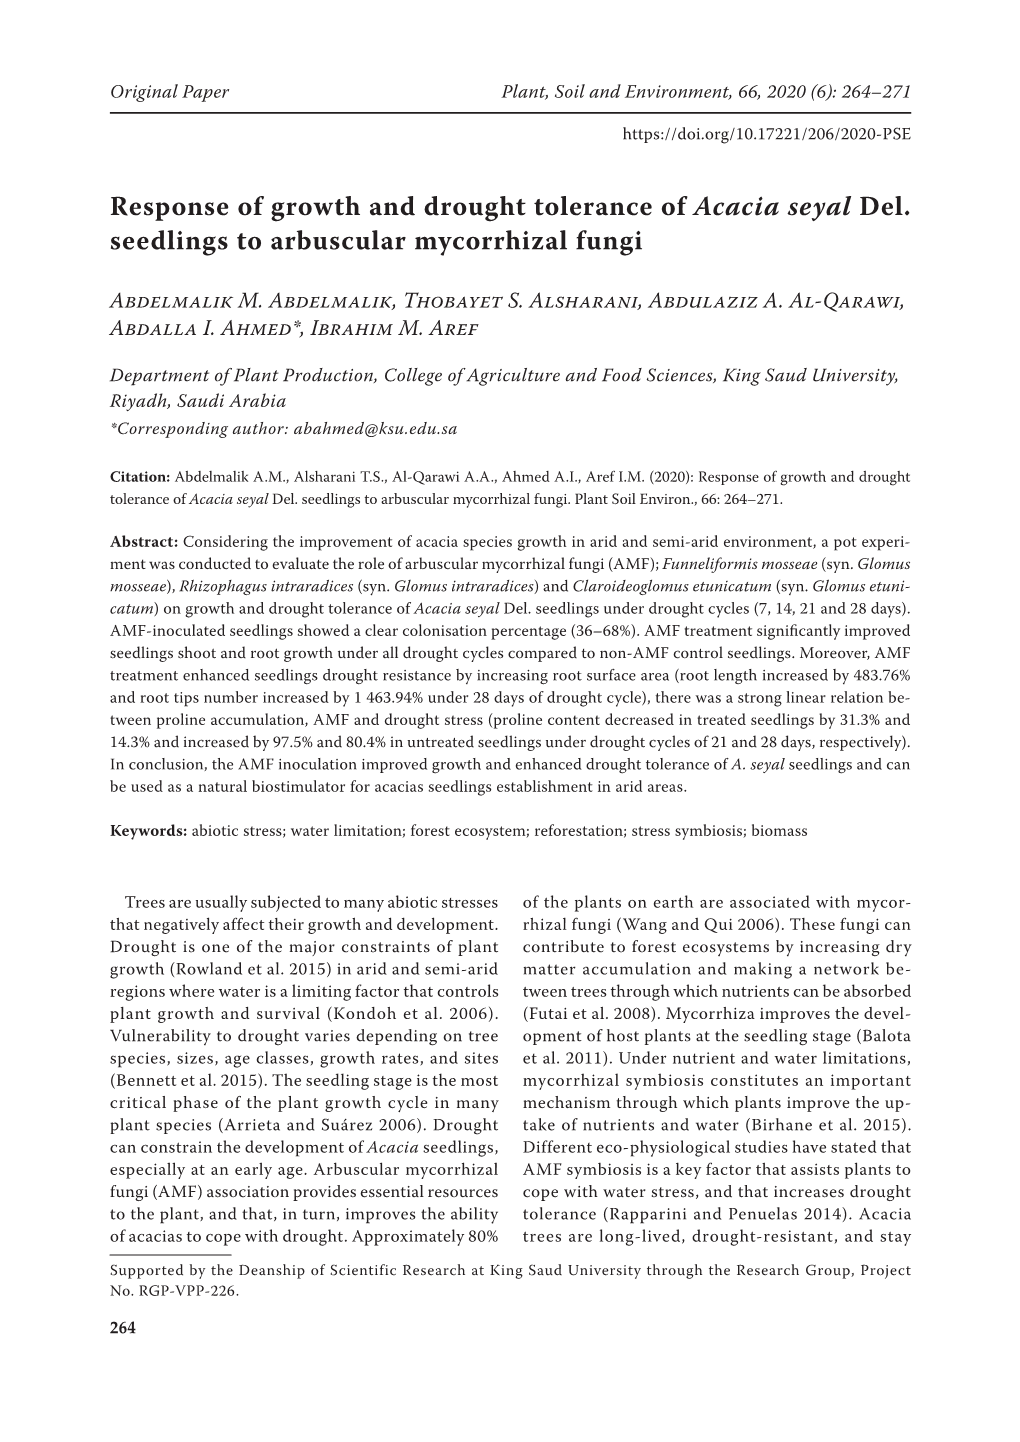 Response of Growth and Drought Tolerance of Acacia Seyal Del. Seedlings to Arbuscular Mycorrhizal Fungi